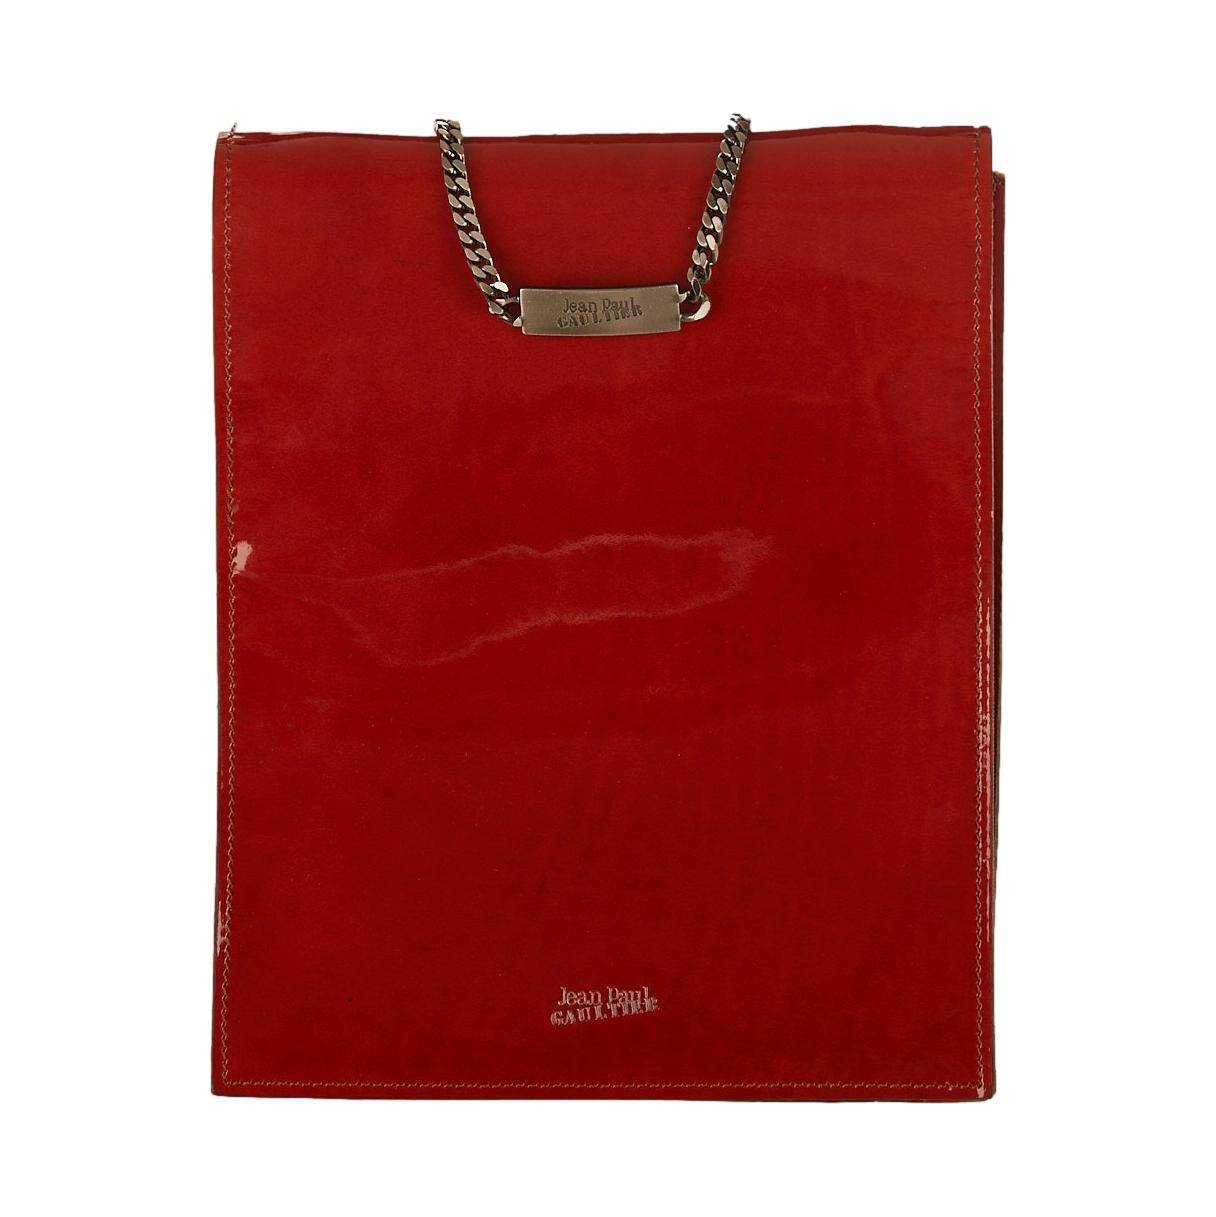 Jean Paul Gaultier Red Chain Shoulder Bag